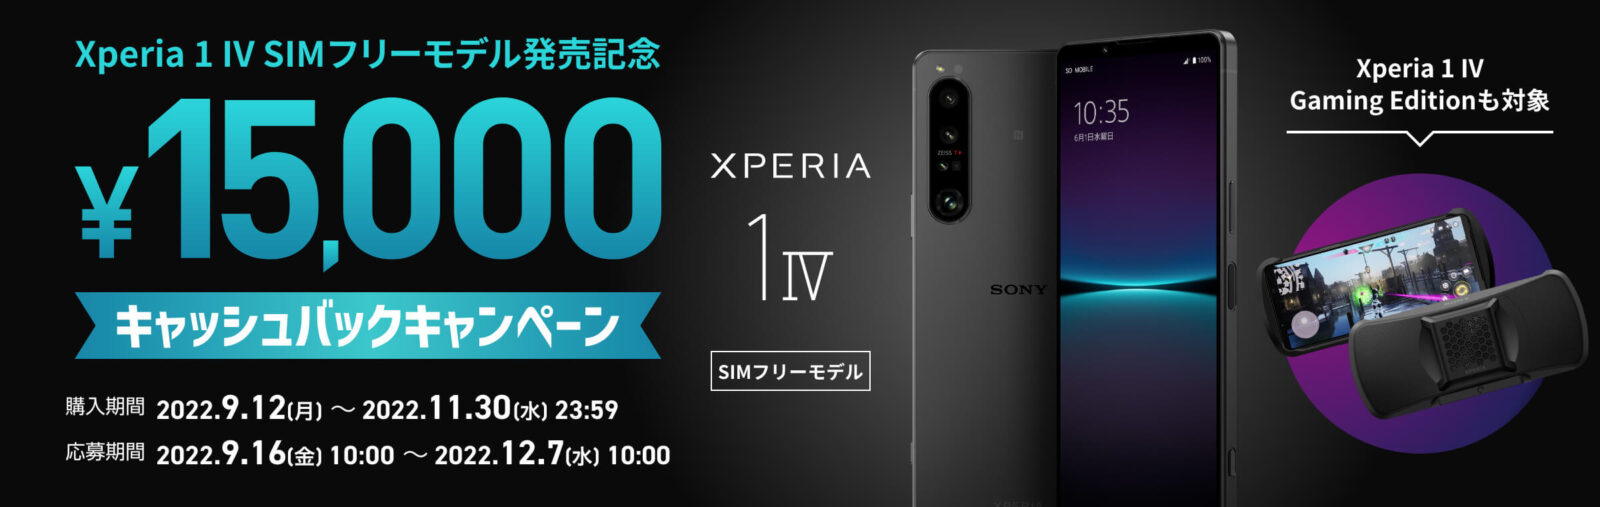 Xperia 1 IV SIMフリーモデル発売記念 15,000円キャッシュバックキャンペーン